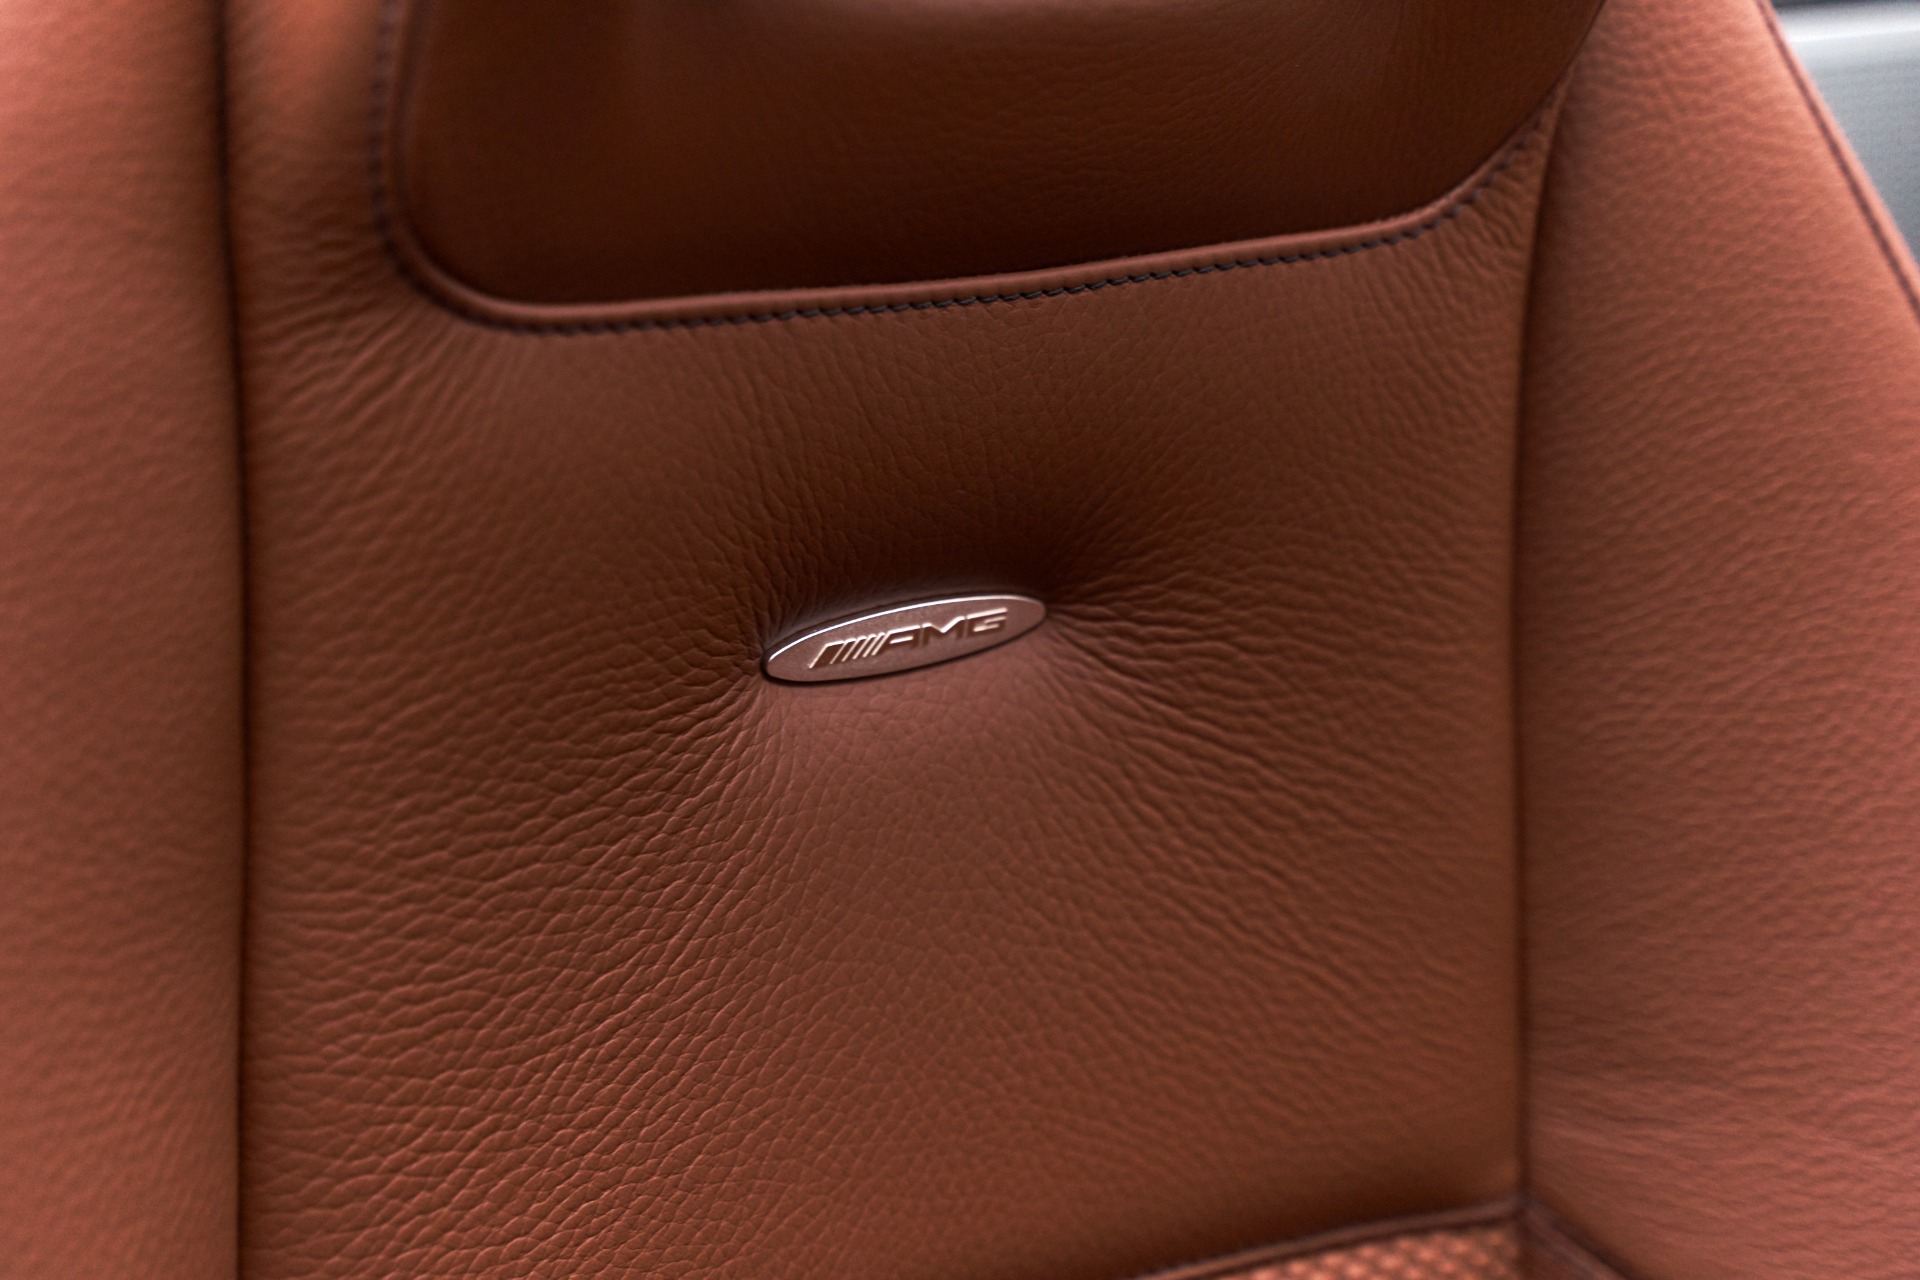 Mercedes-Benz SLS AMG Car Mercedes-Benz AMG GT Mercedes-AMG, Leather women  bag, brown, image File Formats, leather png